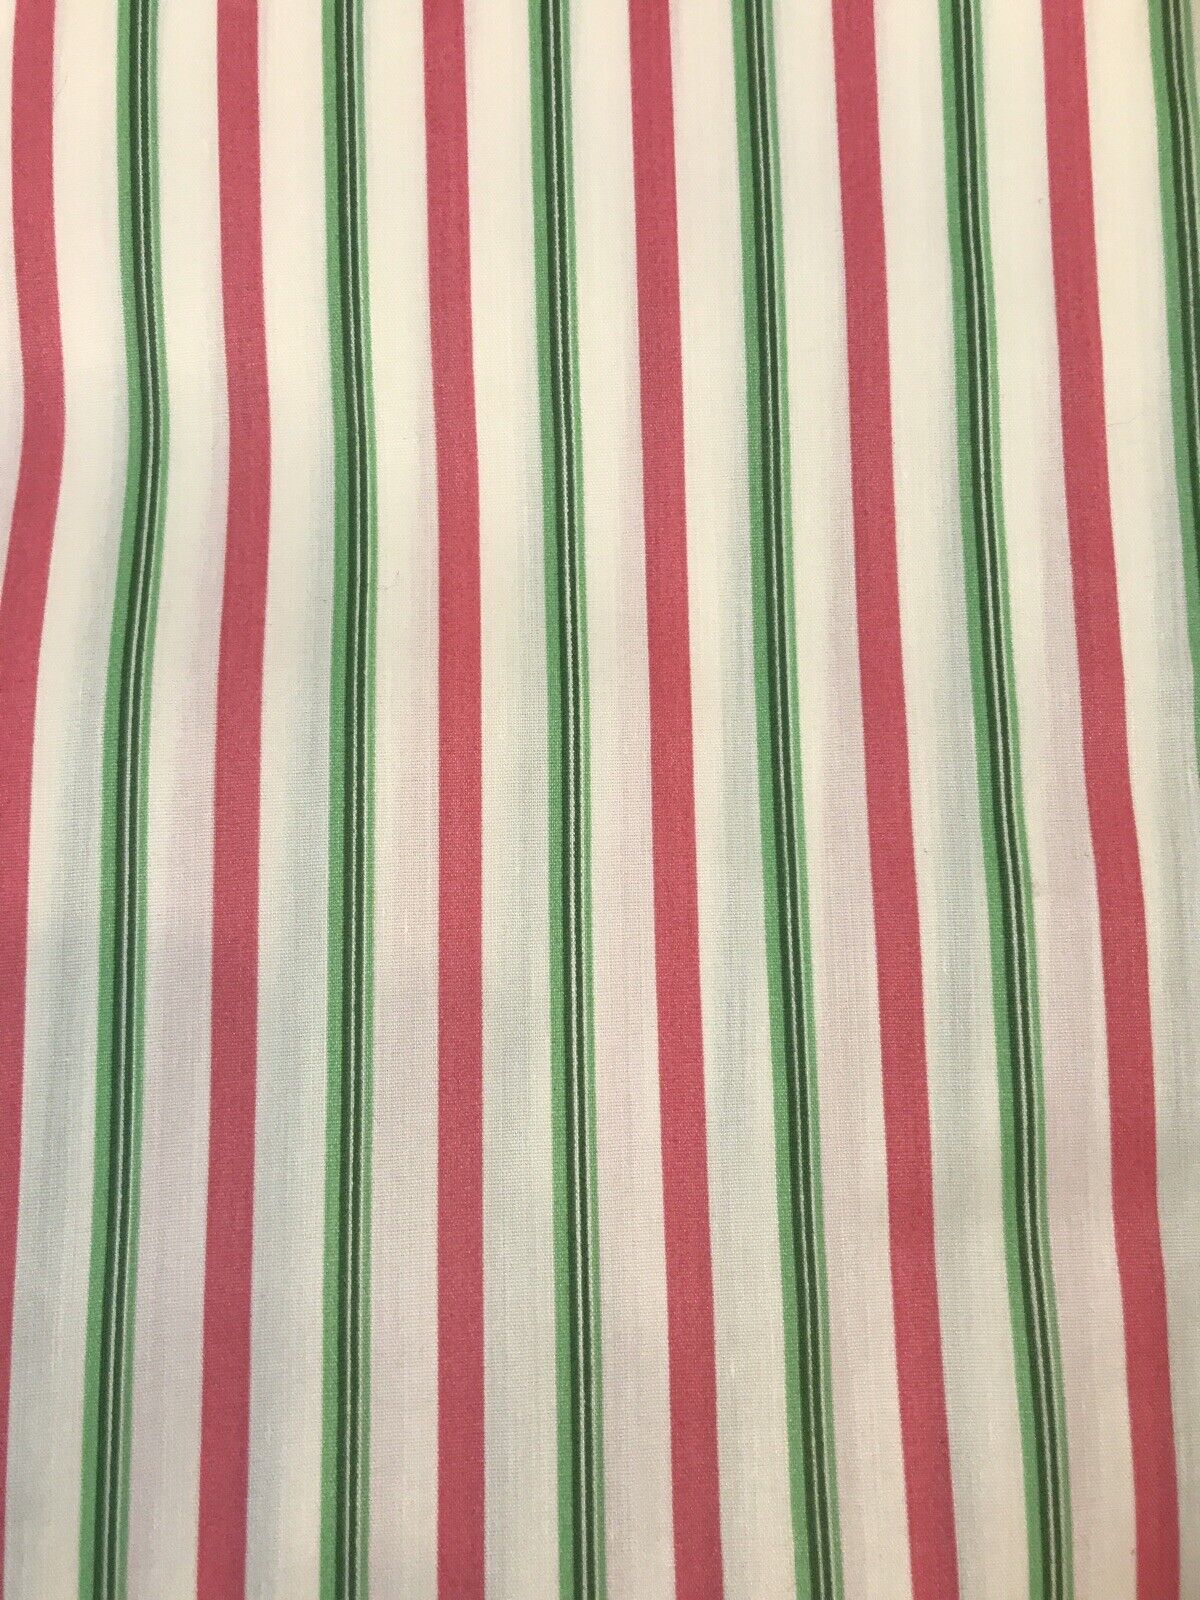 Vintage Fabric Striped Pink Green Preppy Cottage Cotton 1981 Nettlecreek 6 Yds 